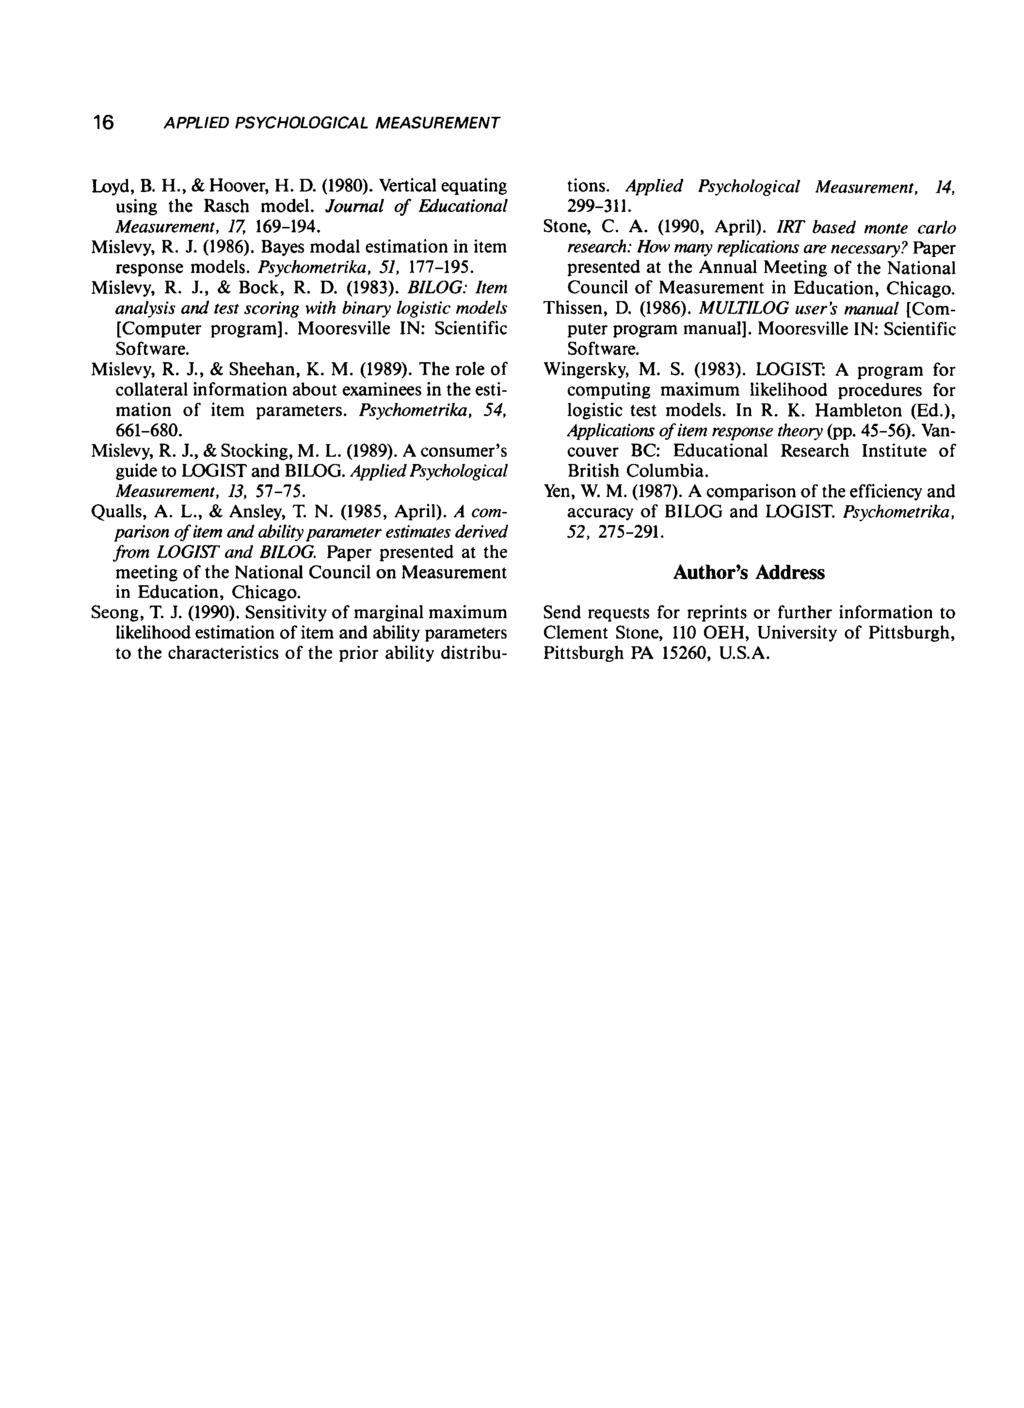 16 Loyd, B. H., & Hoover, H. D. (1980). Vertical equating using the Rasch model. Journal of Educational Measurement, 17, 169-194. Mislevy, R. J. (1986). Bayes modal estimation in item response models.